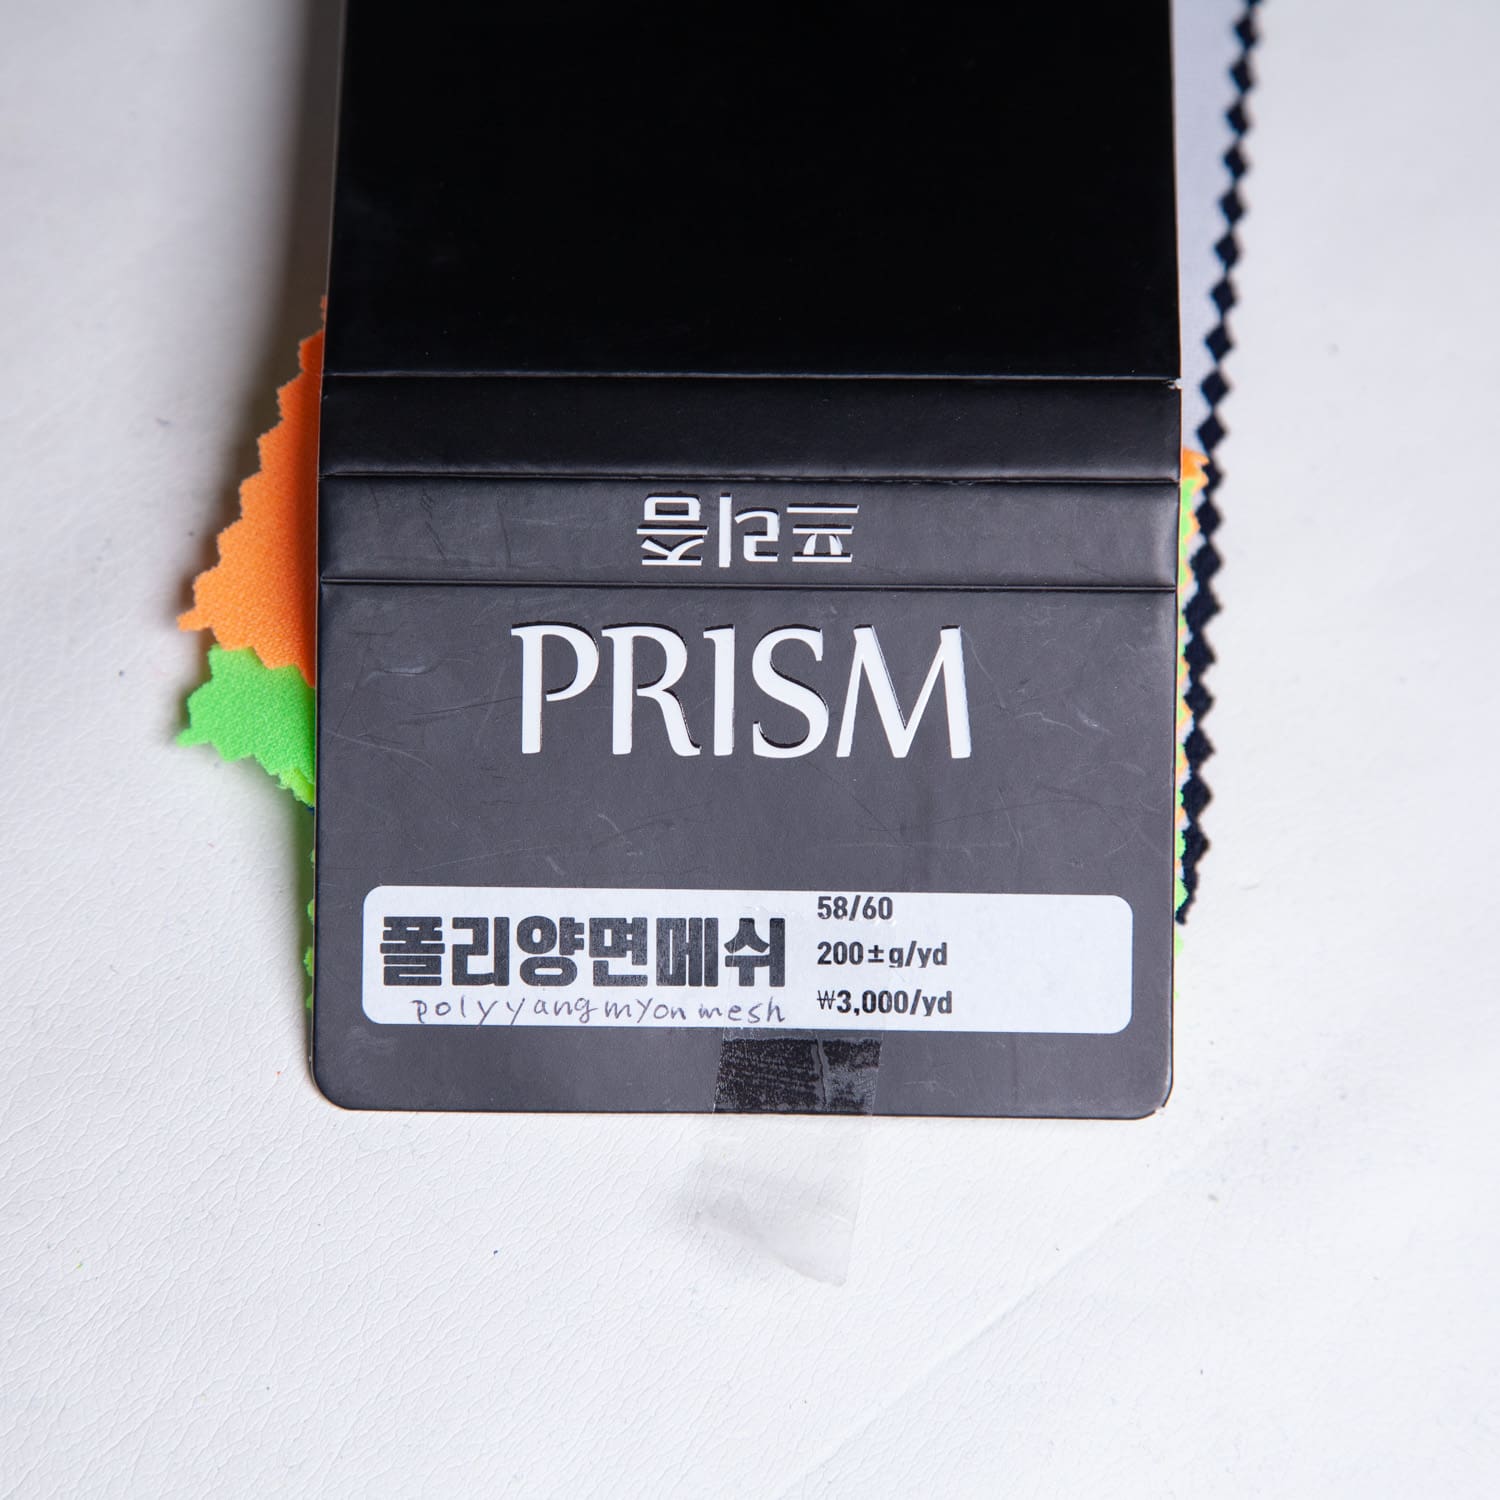 prism_poly-yang-myonmesh_p100-11